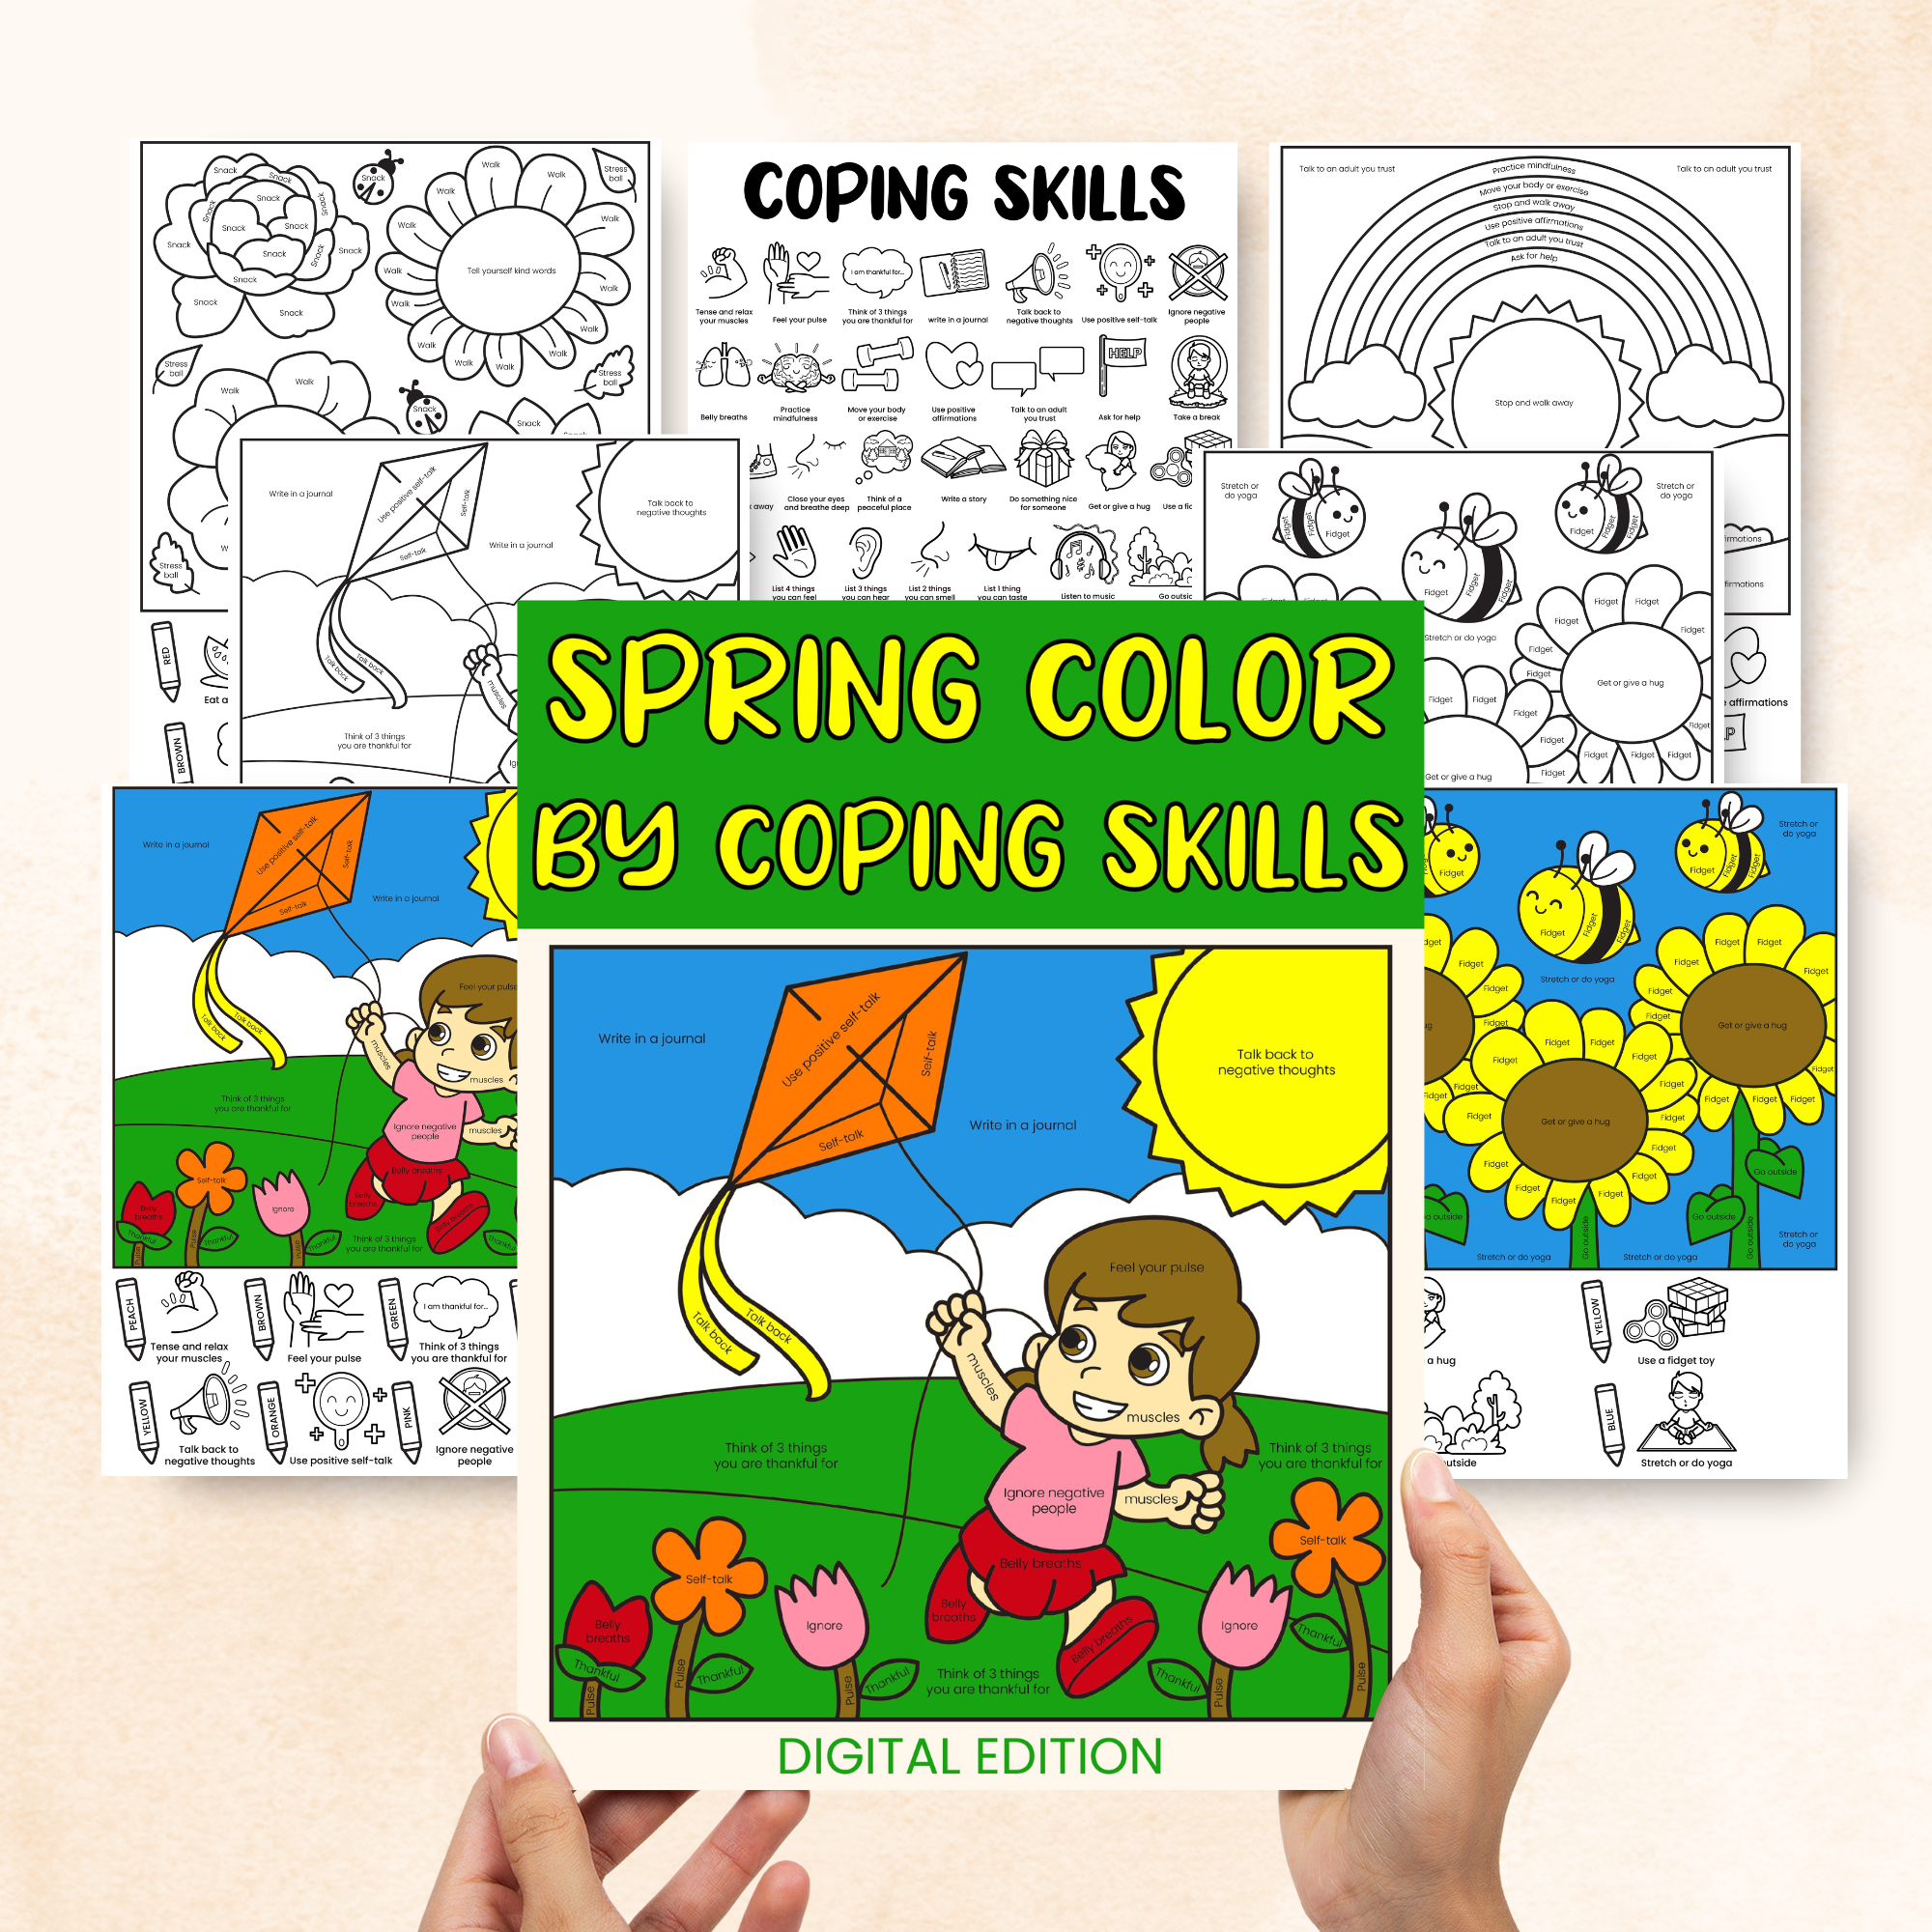 Spring coloring pages for kids â mental health center kids